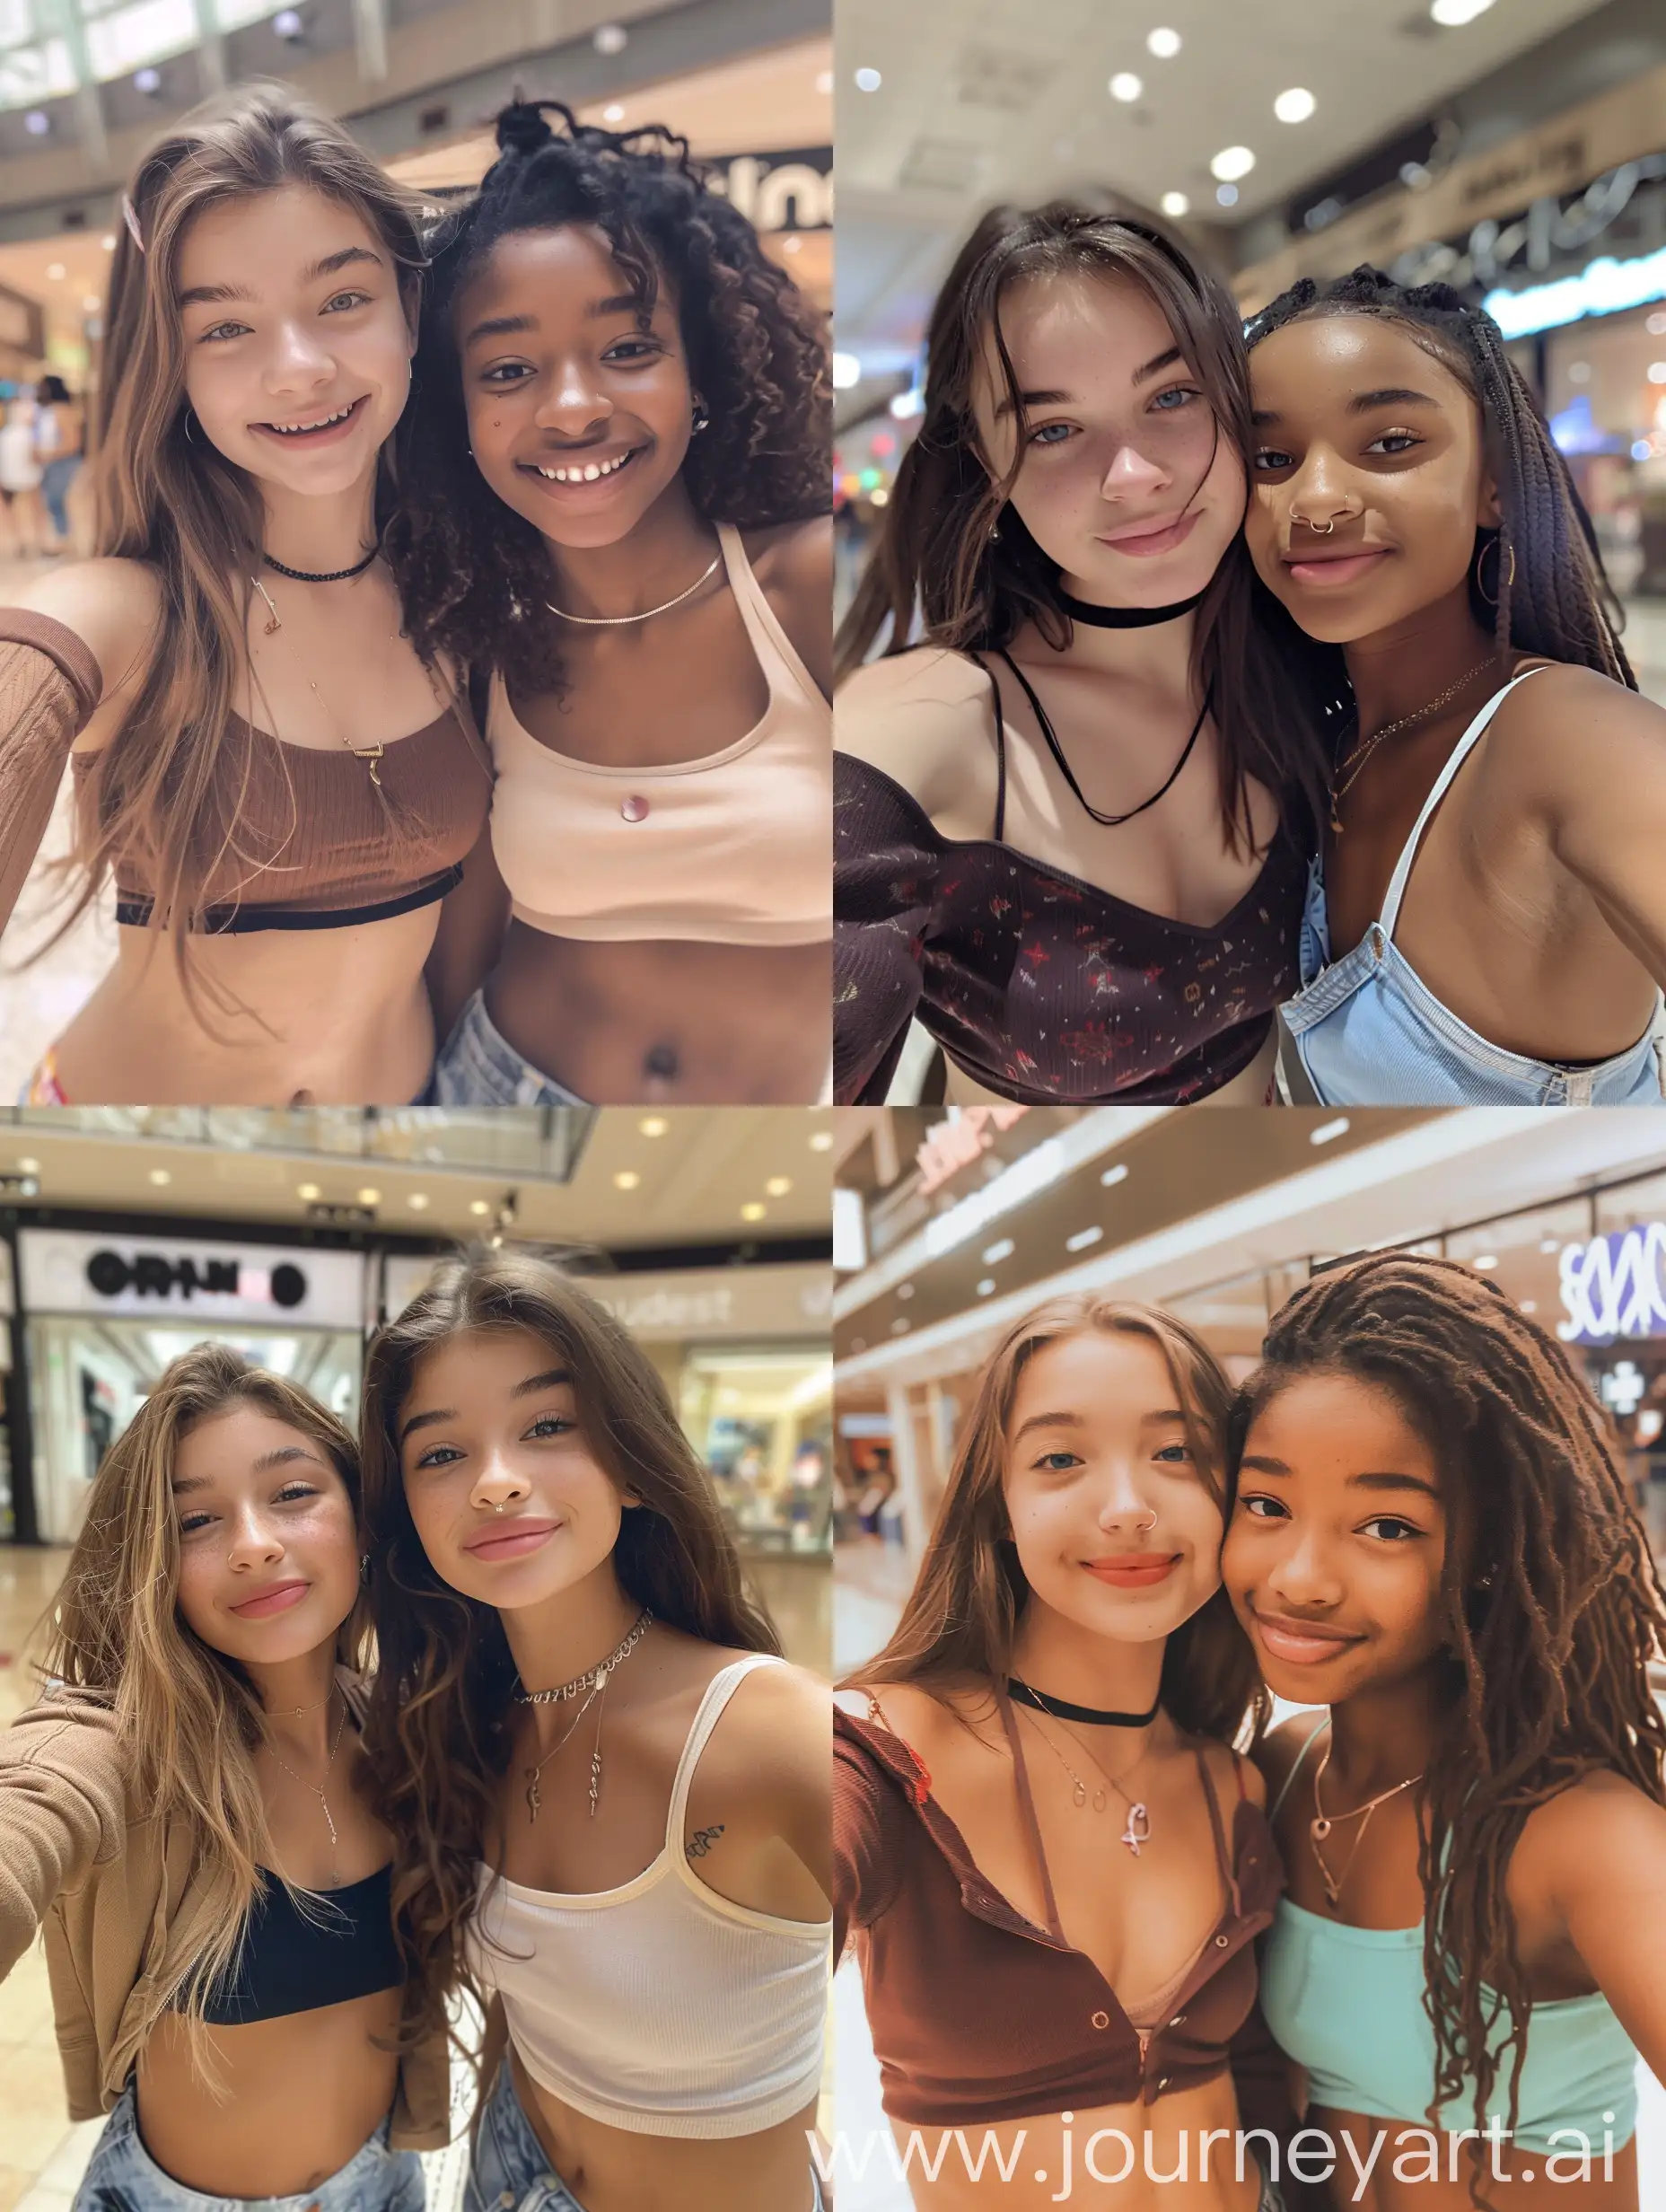 Trendy-18YearOld-Girls-Taking-Mall-Selfie-in-Stylish-Attire